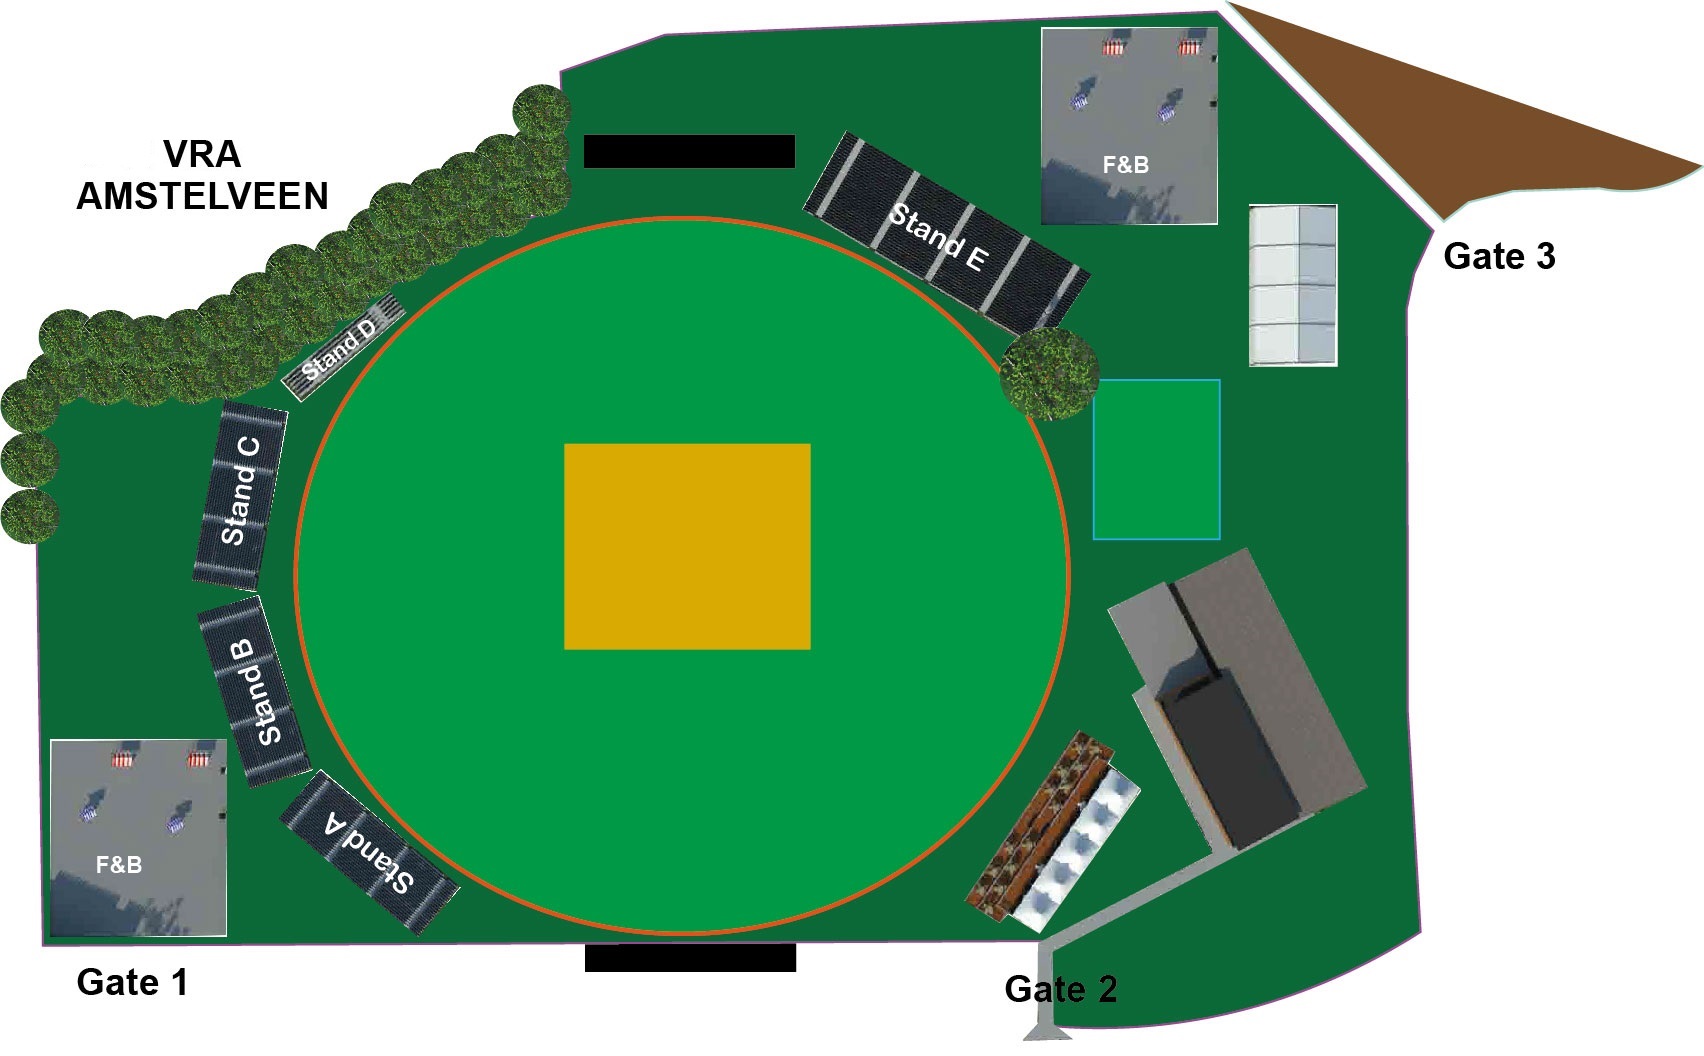 VRA Cricket Ground Amstelveen Seating Layout Map